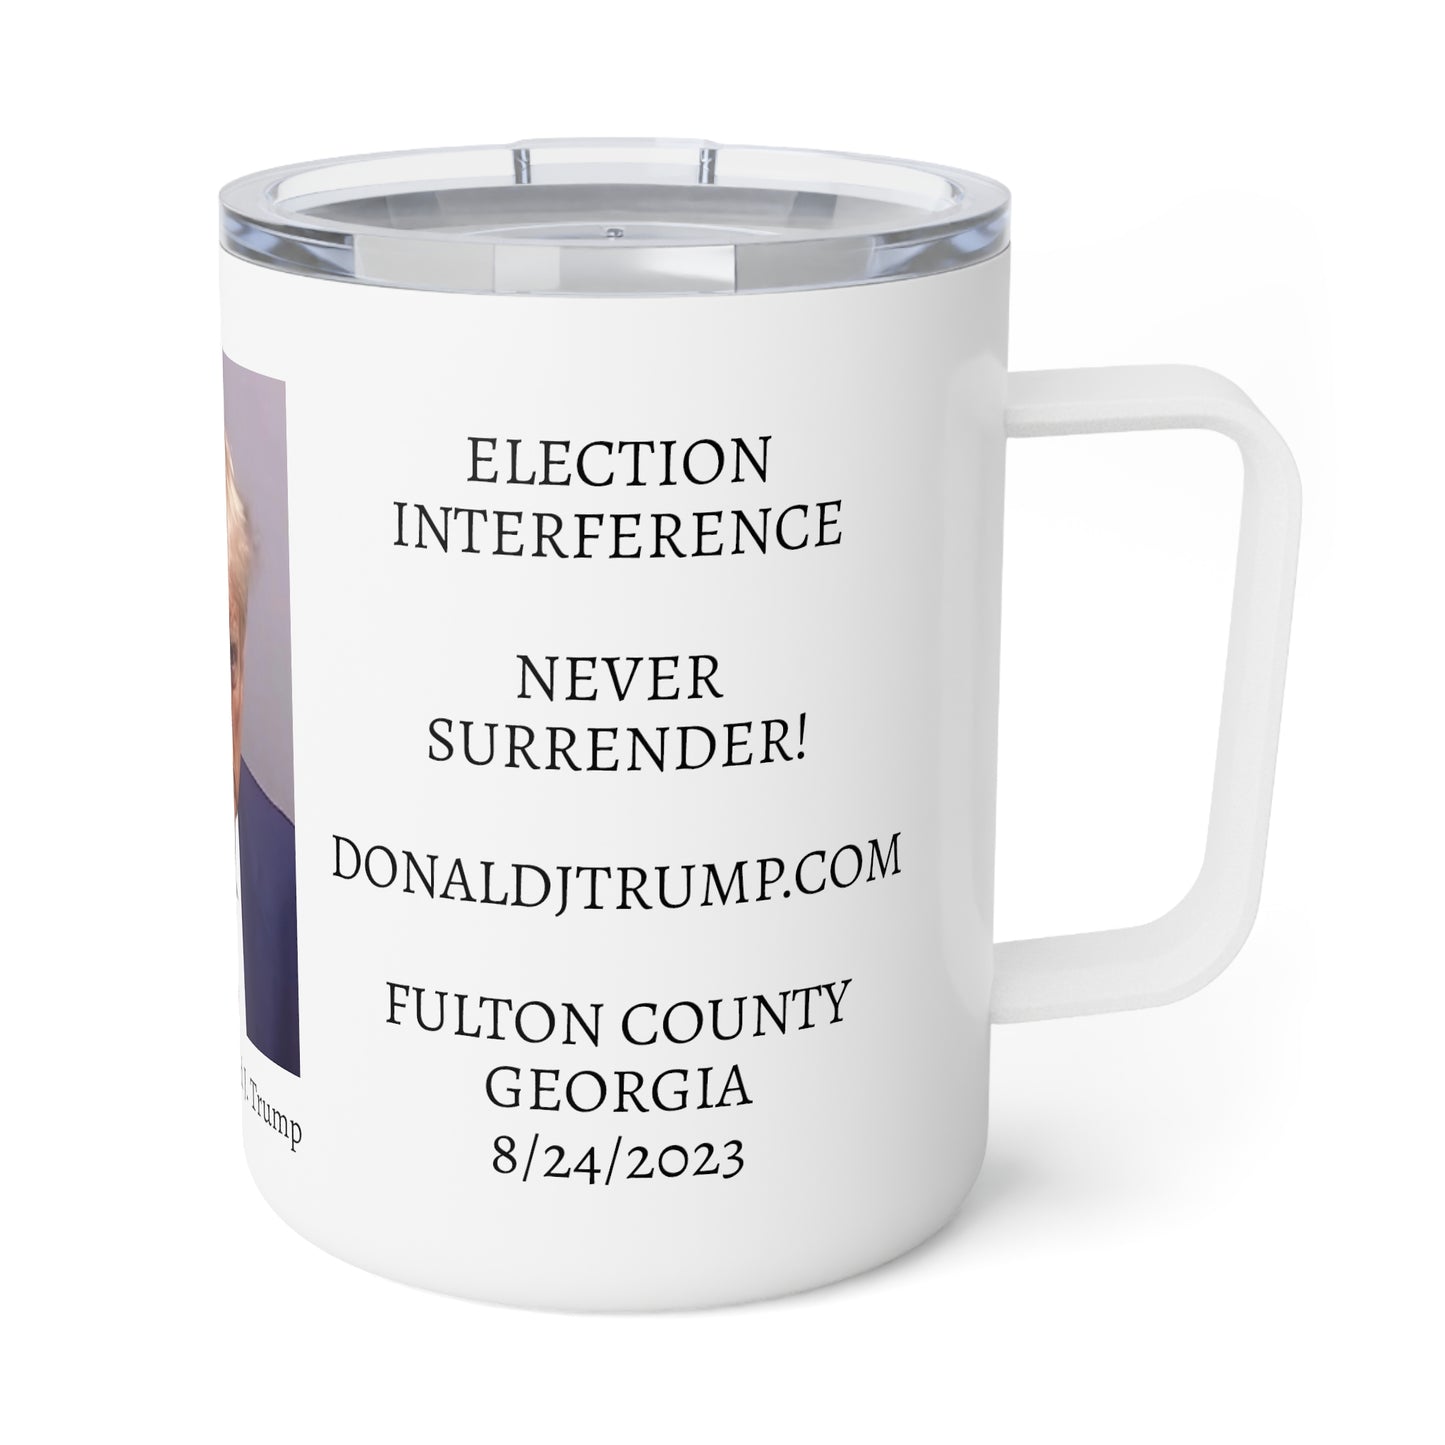 Trump Mug Shot Insulated Coffee Mug, 10oz